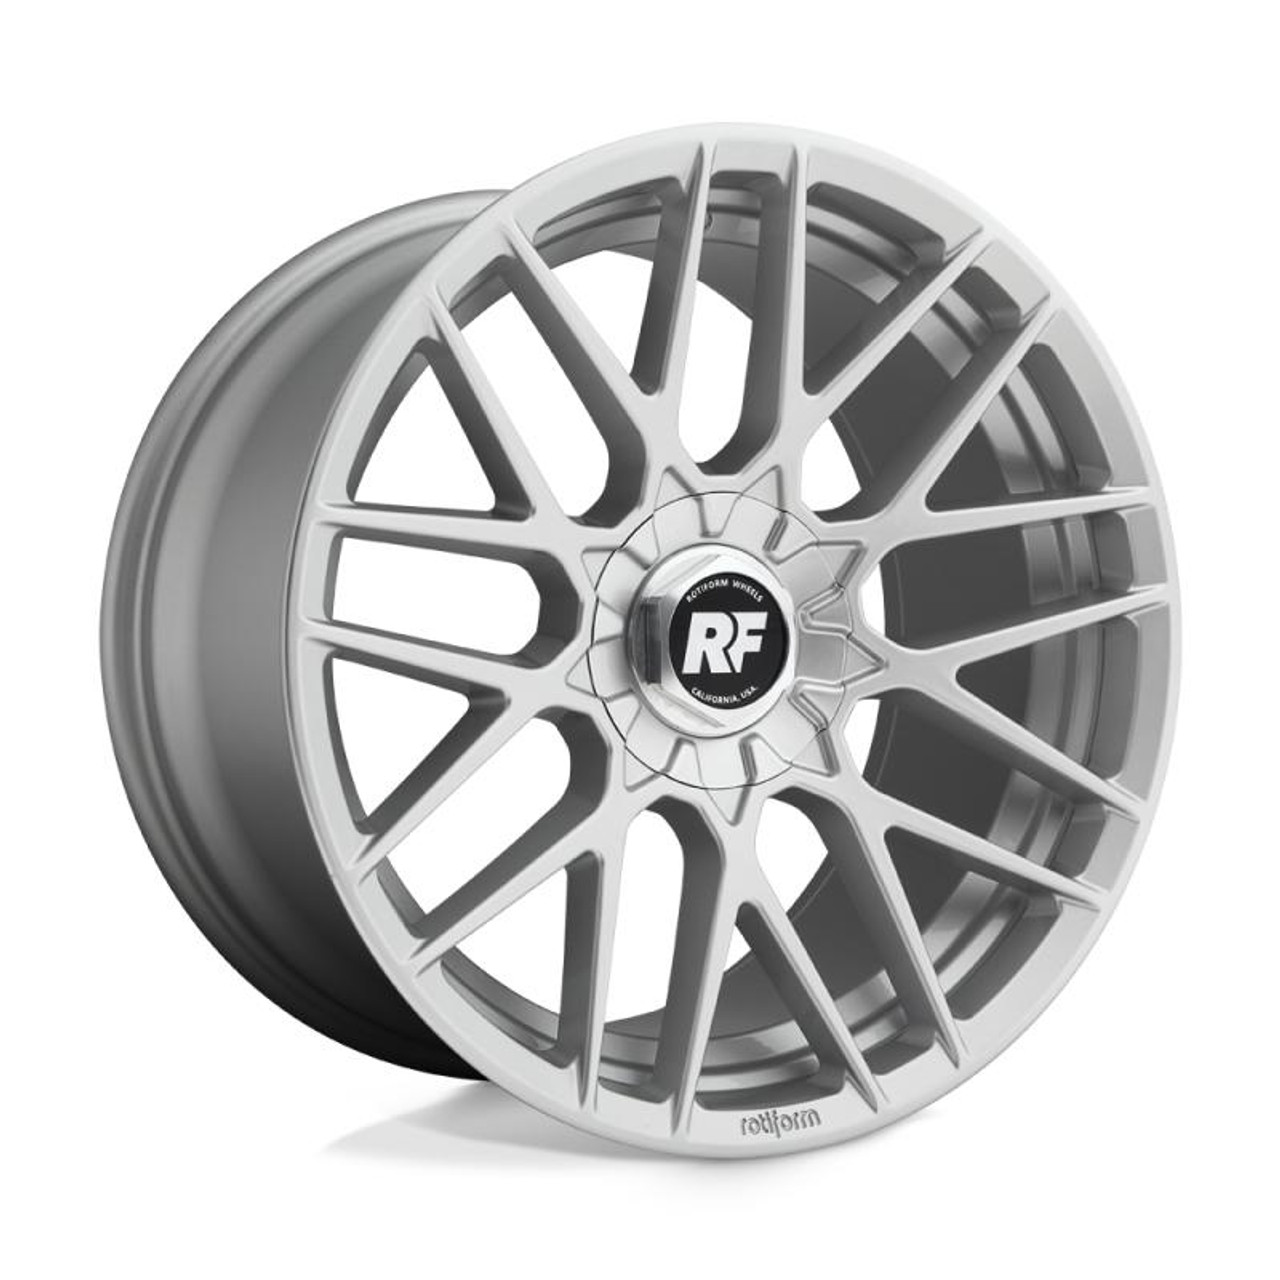  Rotiform R140 RSE Wheel 19x8.5 5x114.3/5x120 35 Offset - Gloss Silver - R140198552+35 